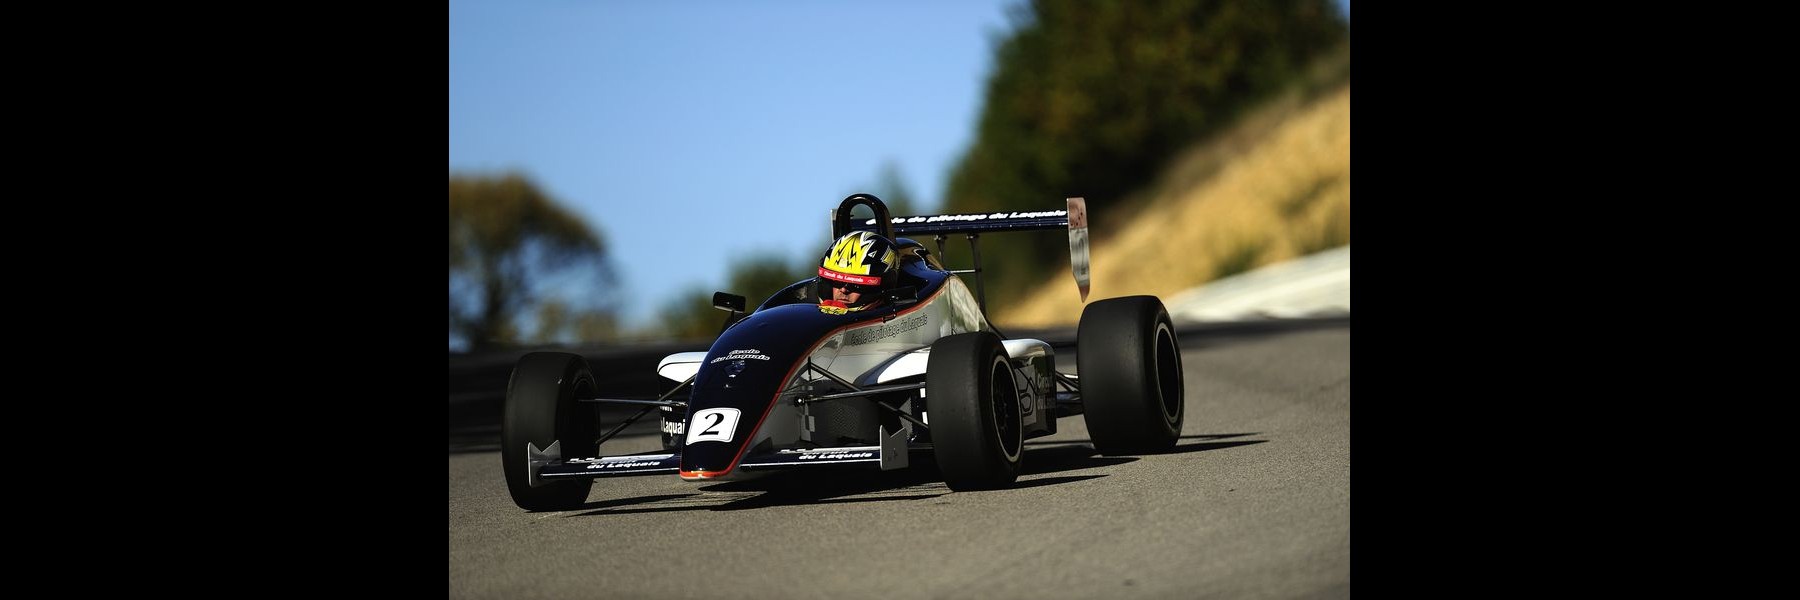 Stage de pilotage Formule Renault